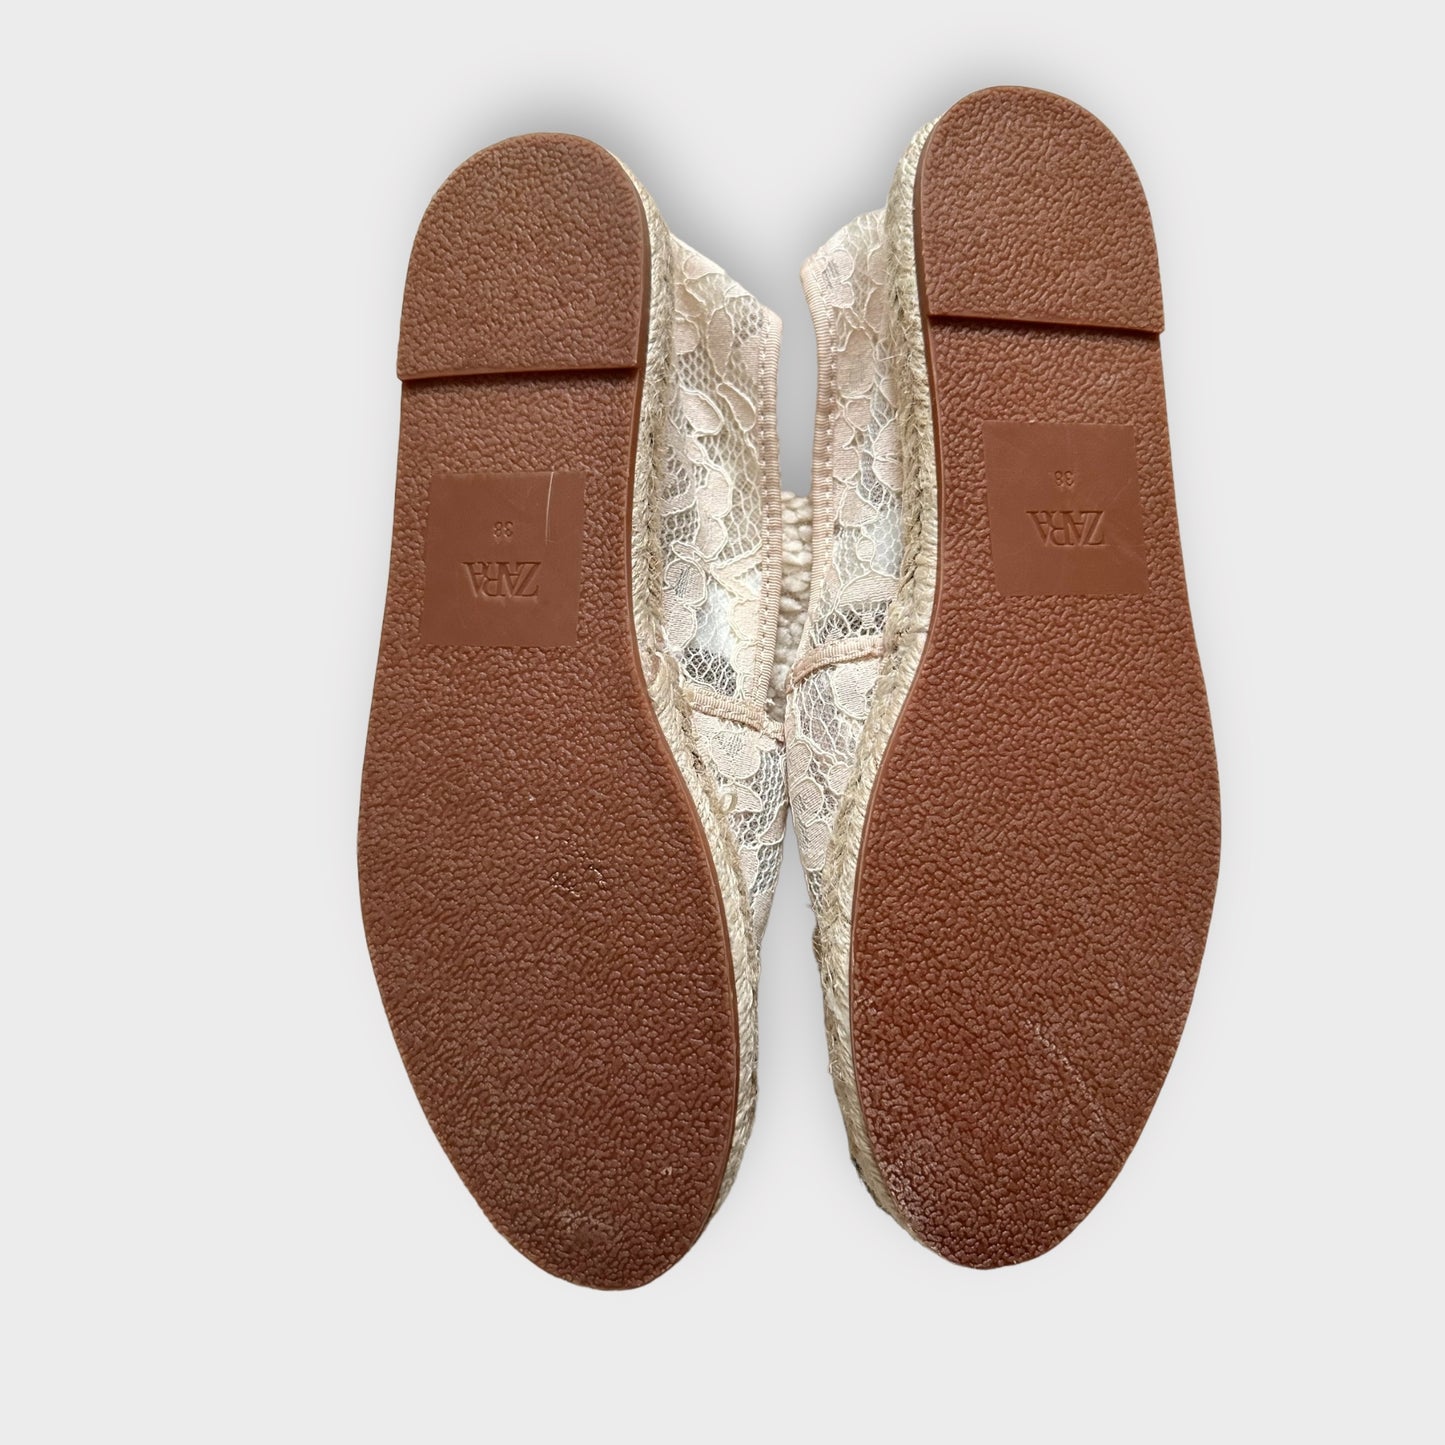 Zara cream lace espadrilles shoes sandals EU 38 UK 5 new